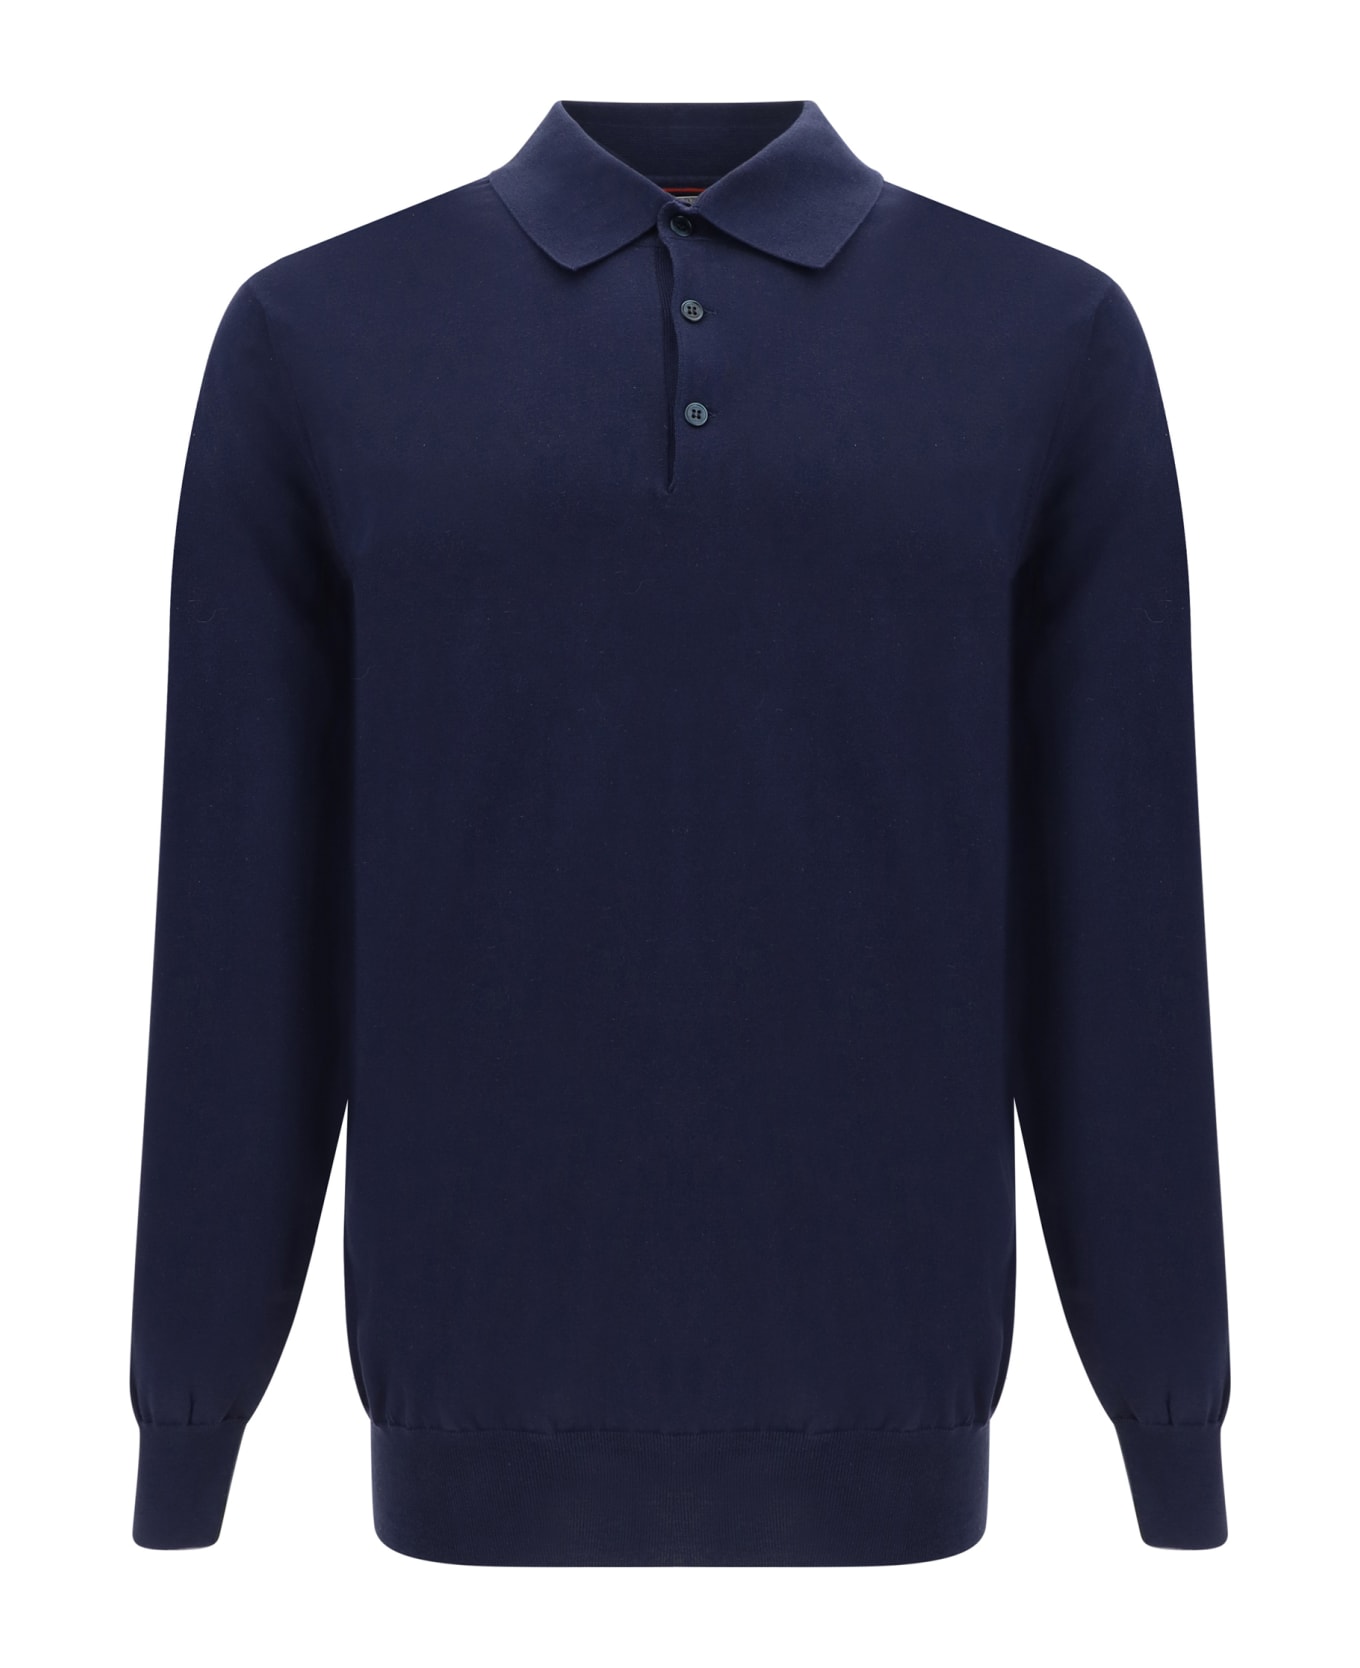 Brunello Cucinelli Long Sleeve Jersey - Navy+grigio Scuro ポロシャツ